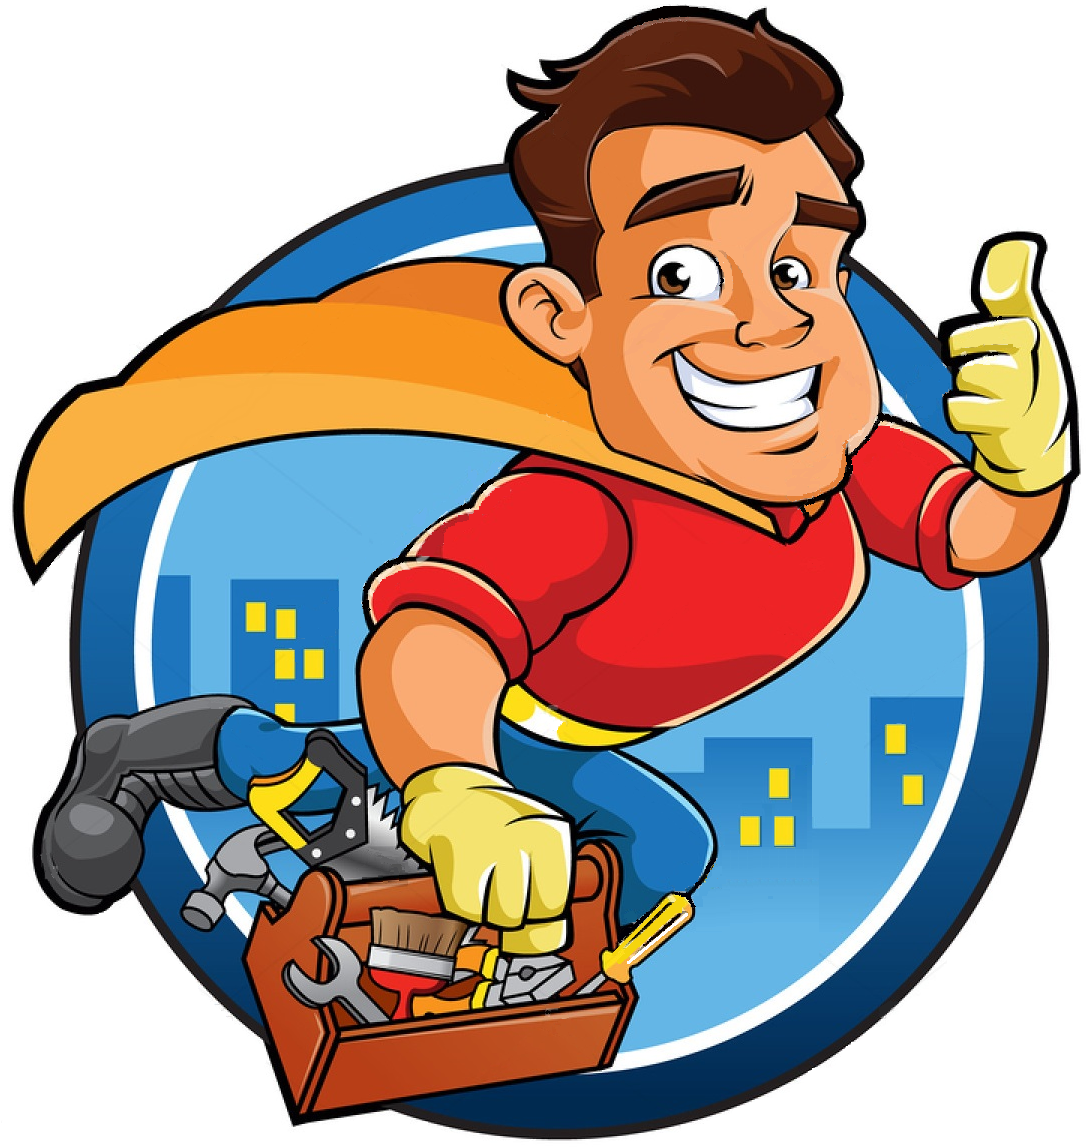 Handyman Cartoon Character With Tools